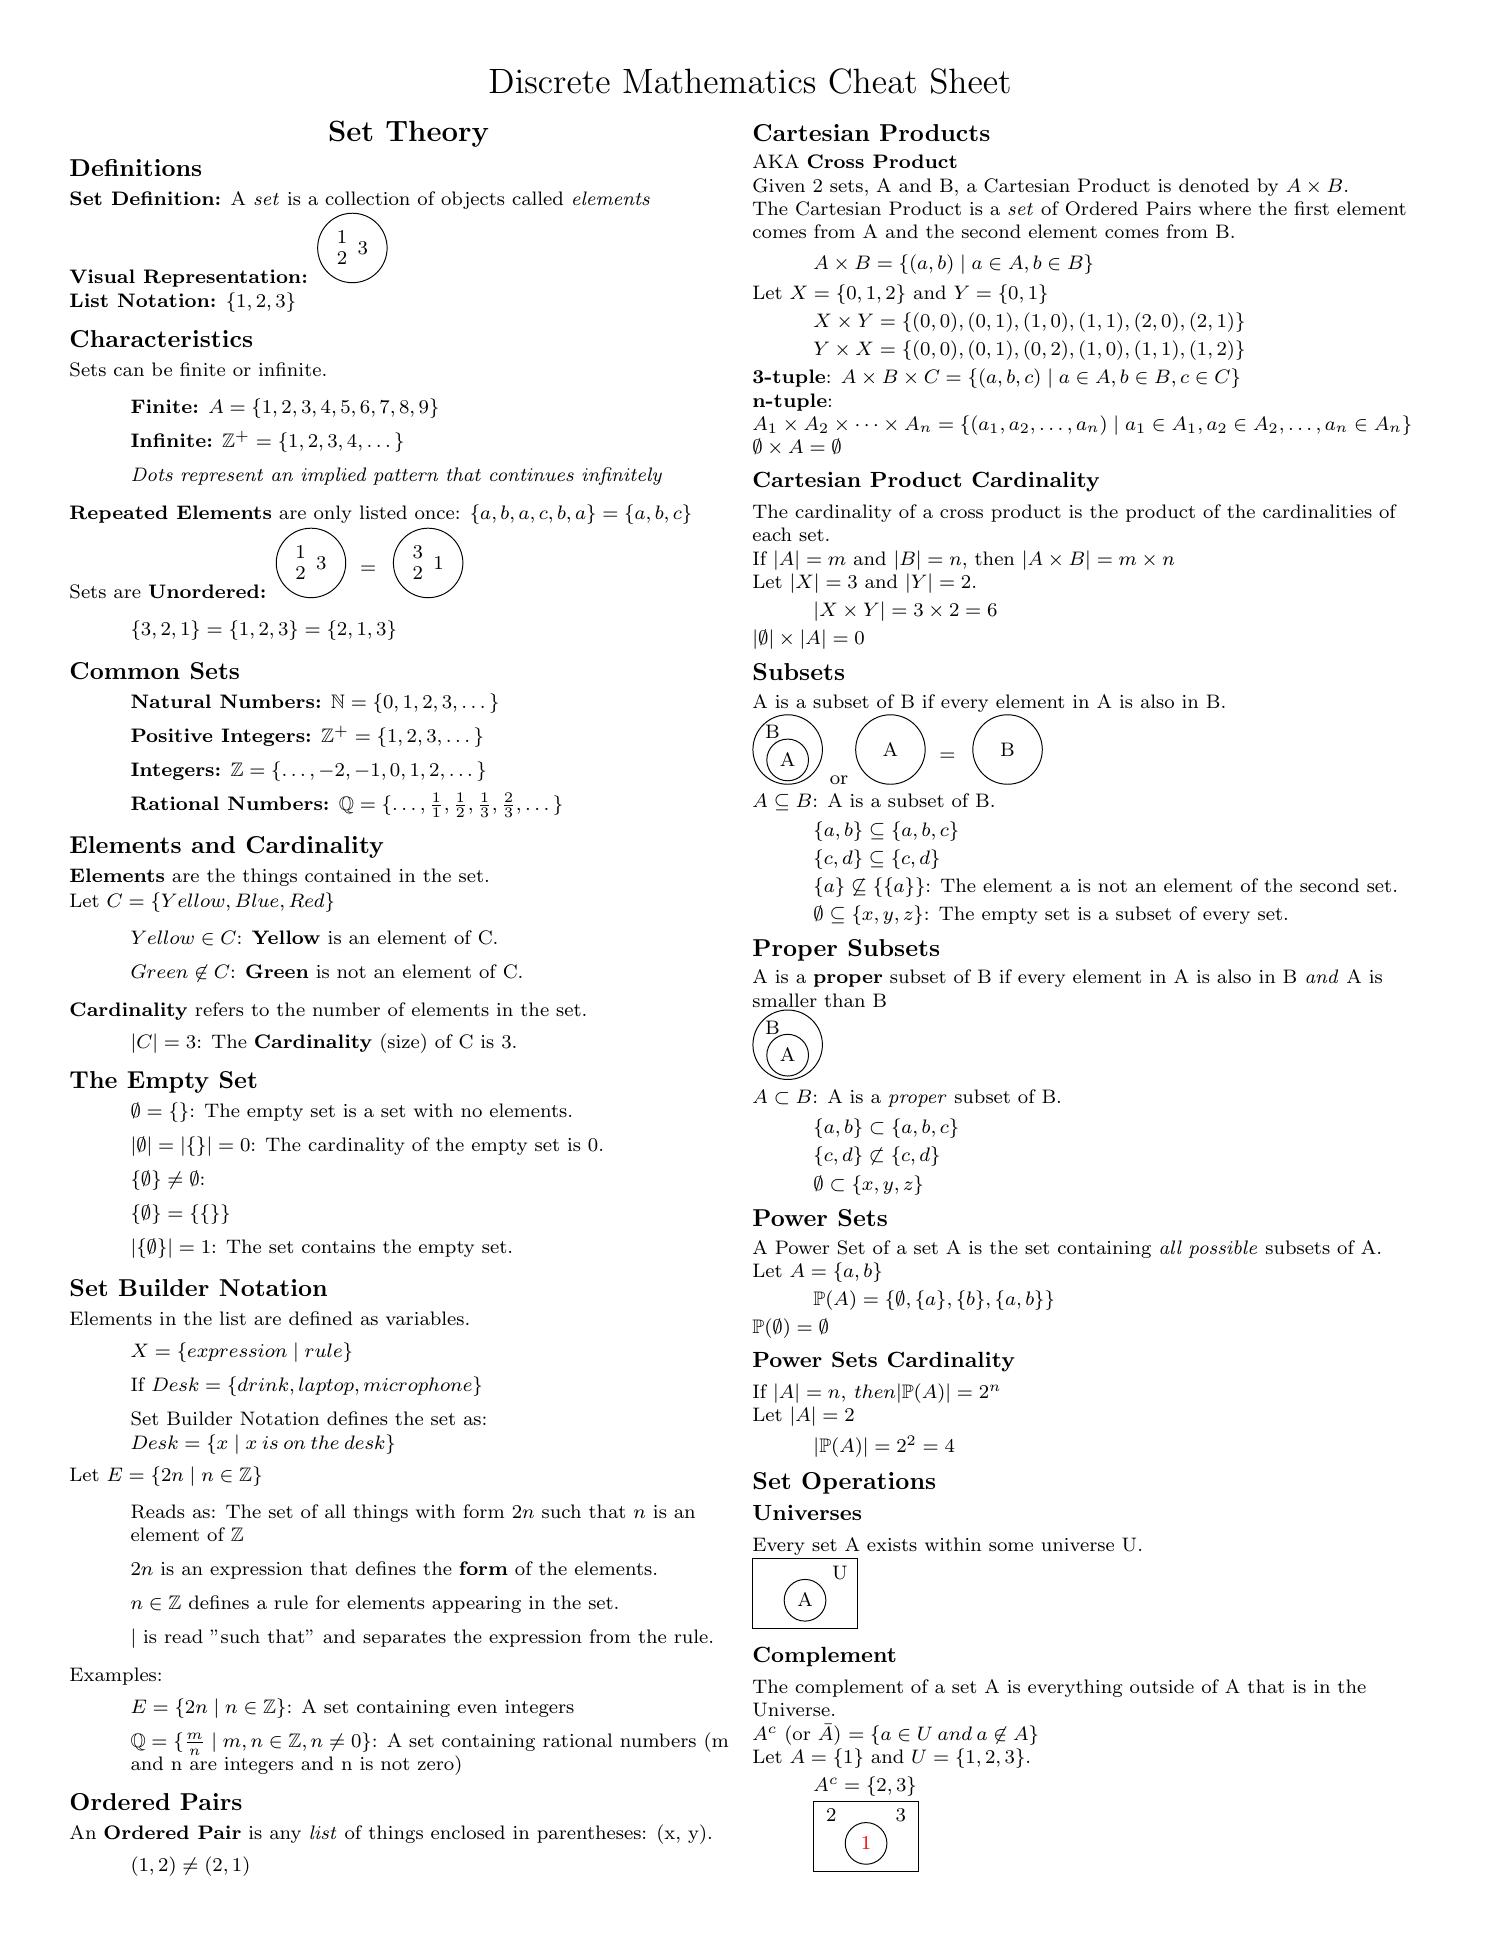 discrete-mathematics-cheat-sheet